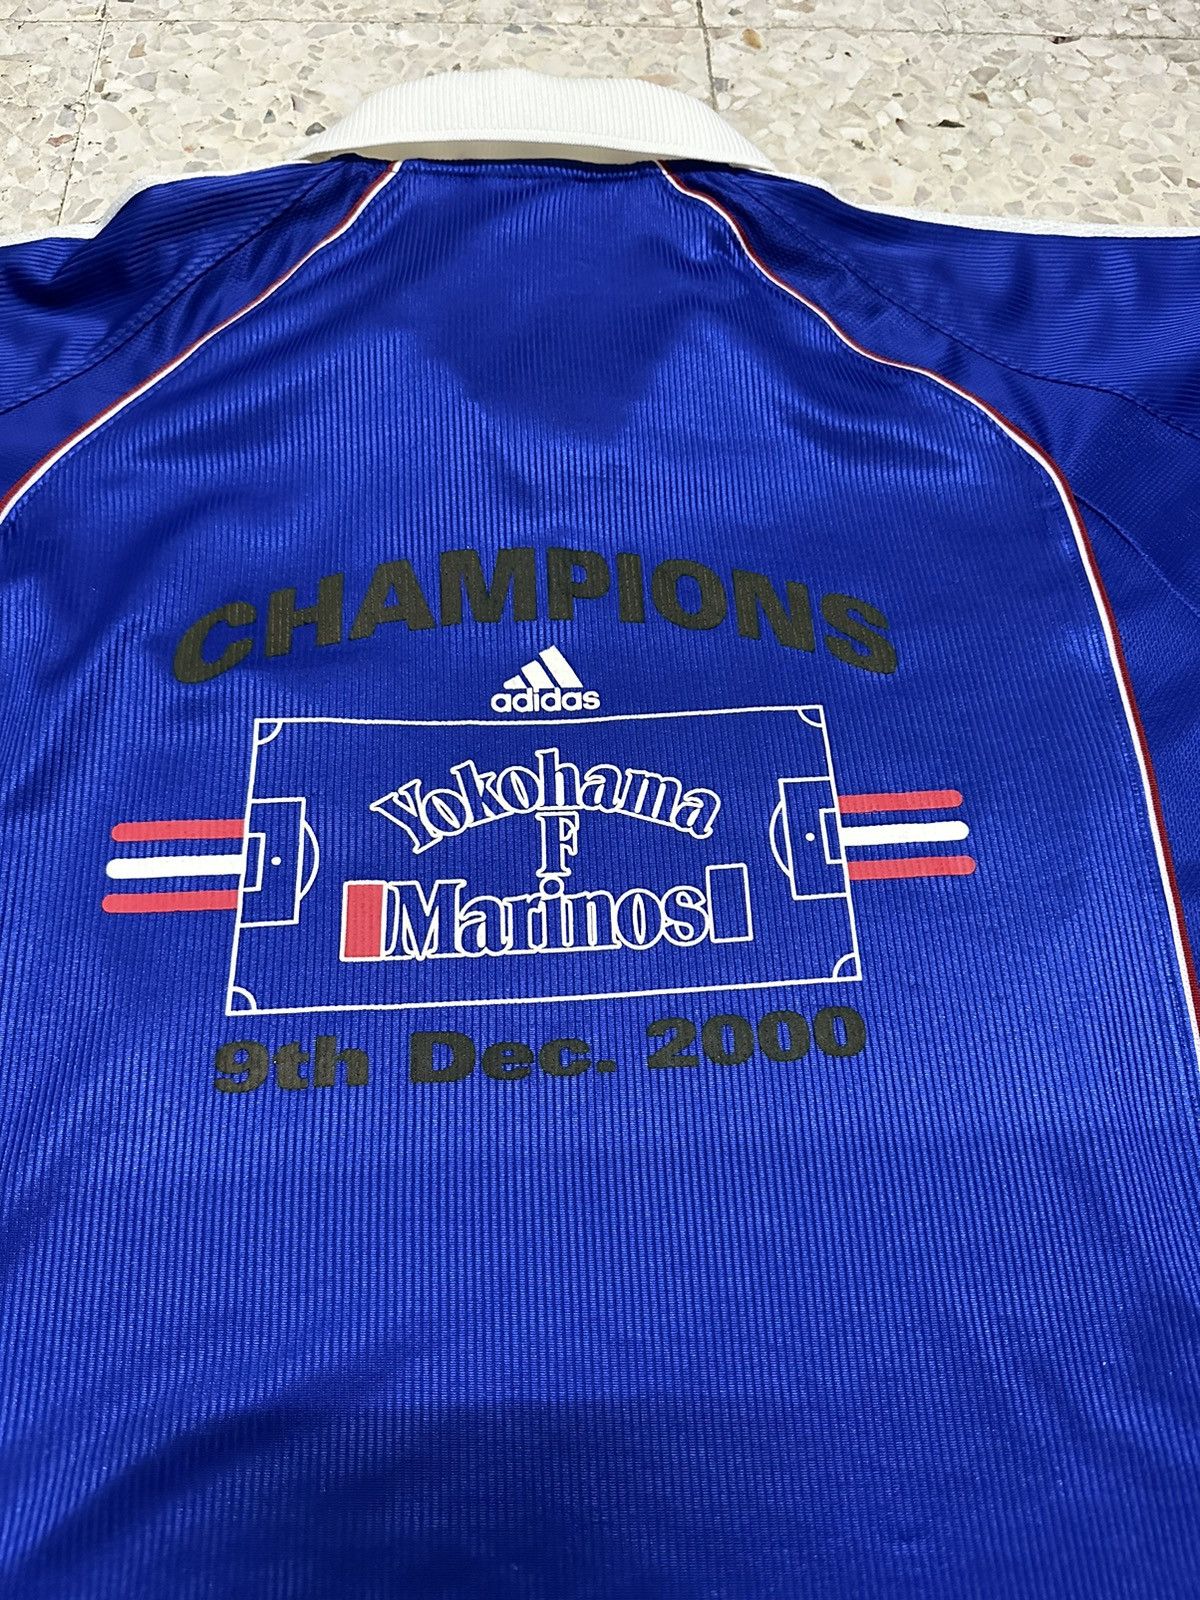 Vintage Adidas 2000 Yokohama marinos Jersey Champions J1 - 7